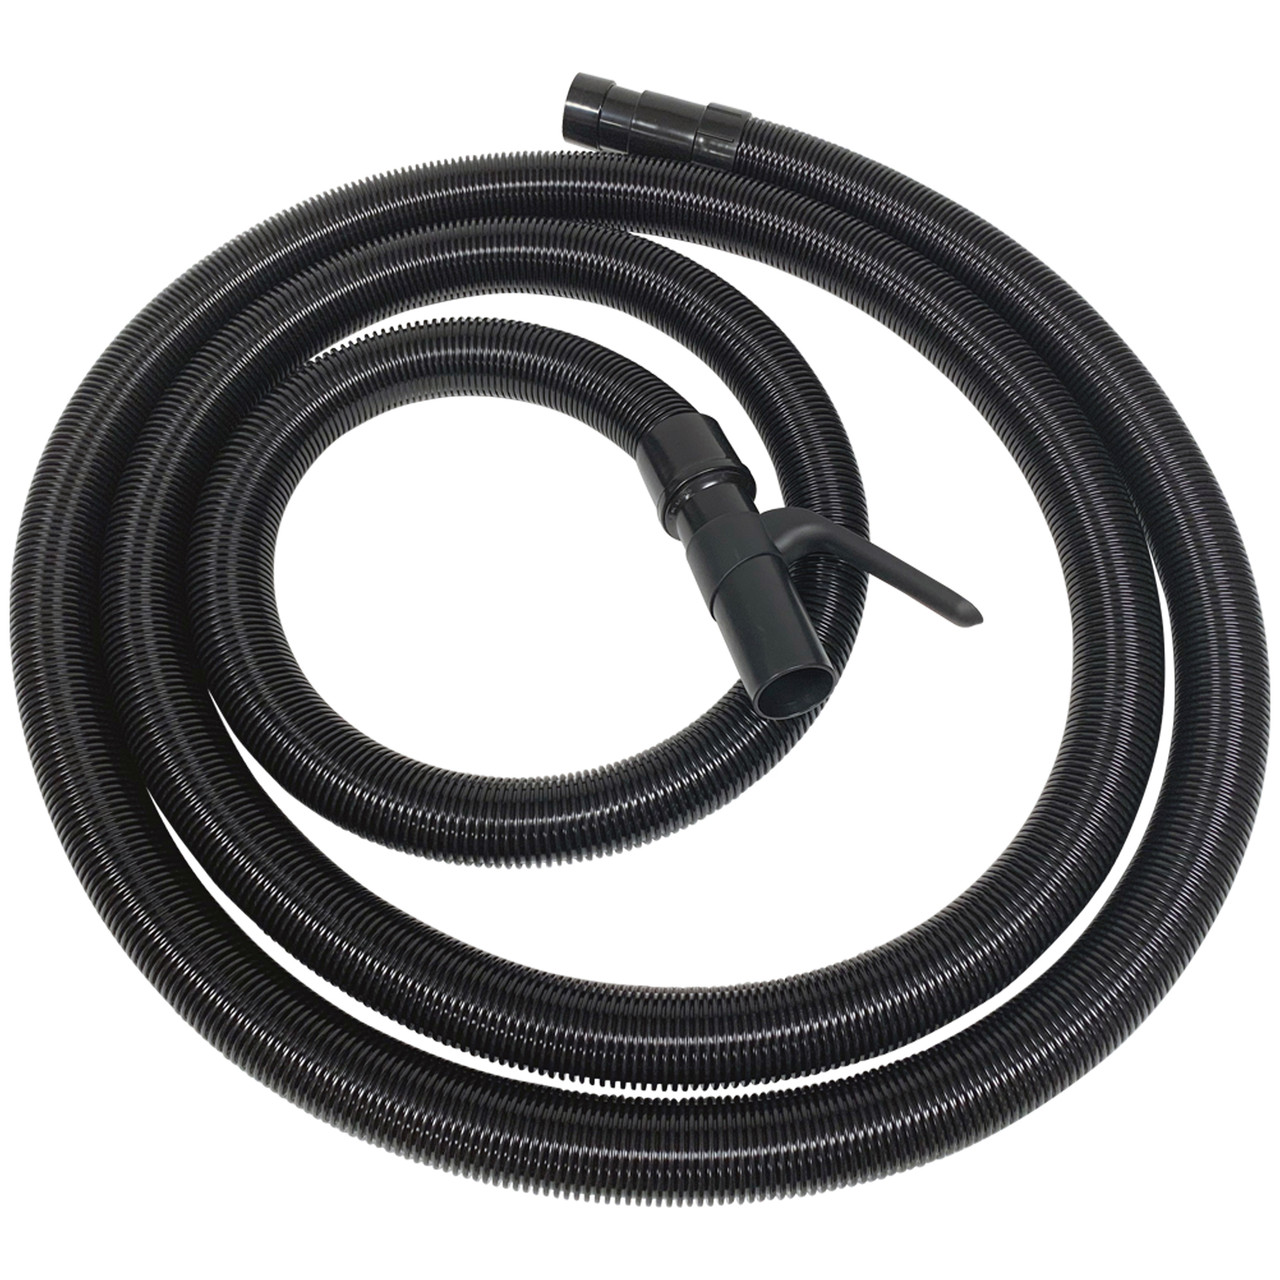 Cen-Tec Systems Flexible Crevice Vacuum Tool, 24-Inch, Black 92487